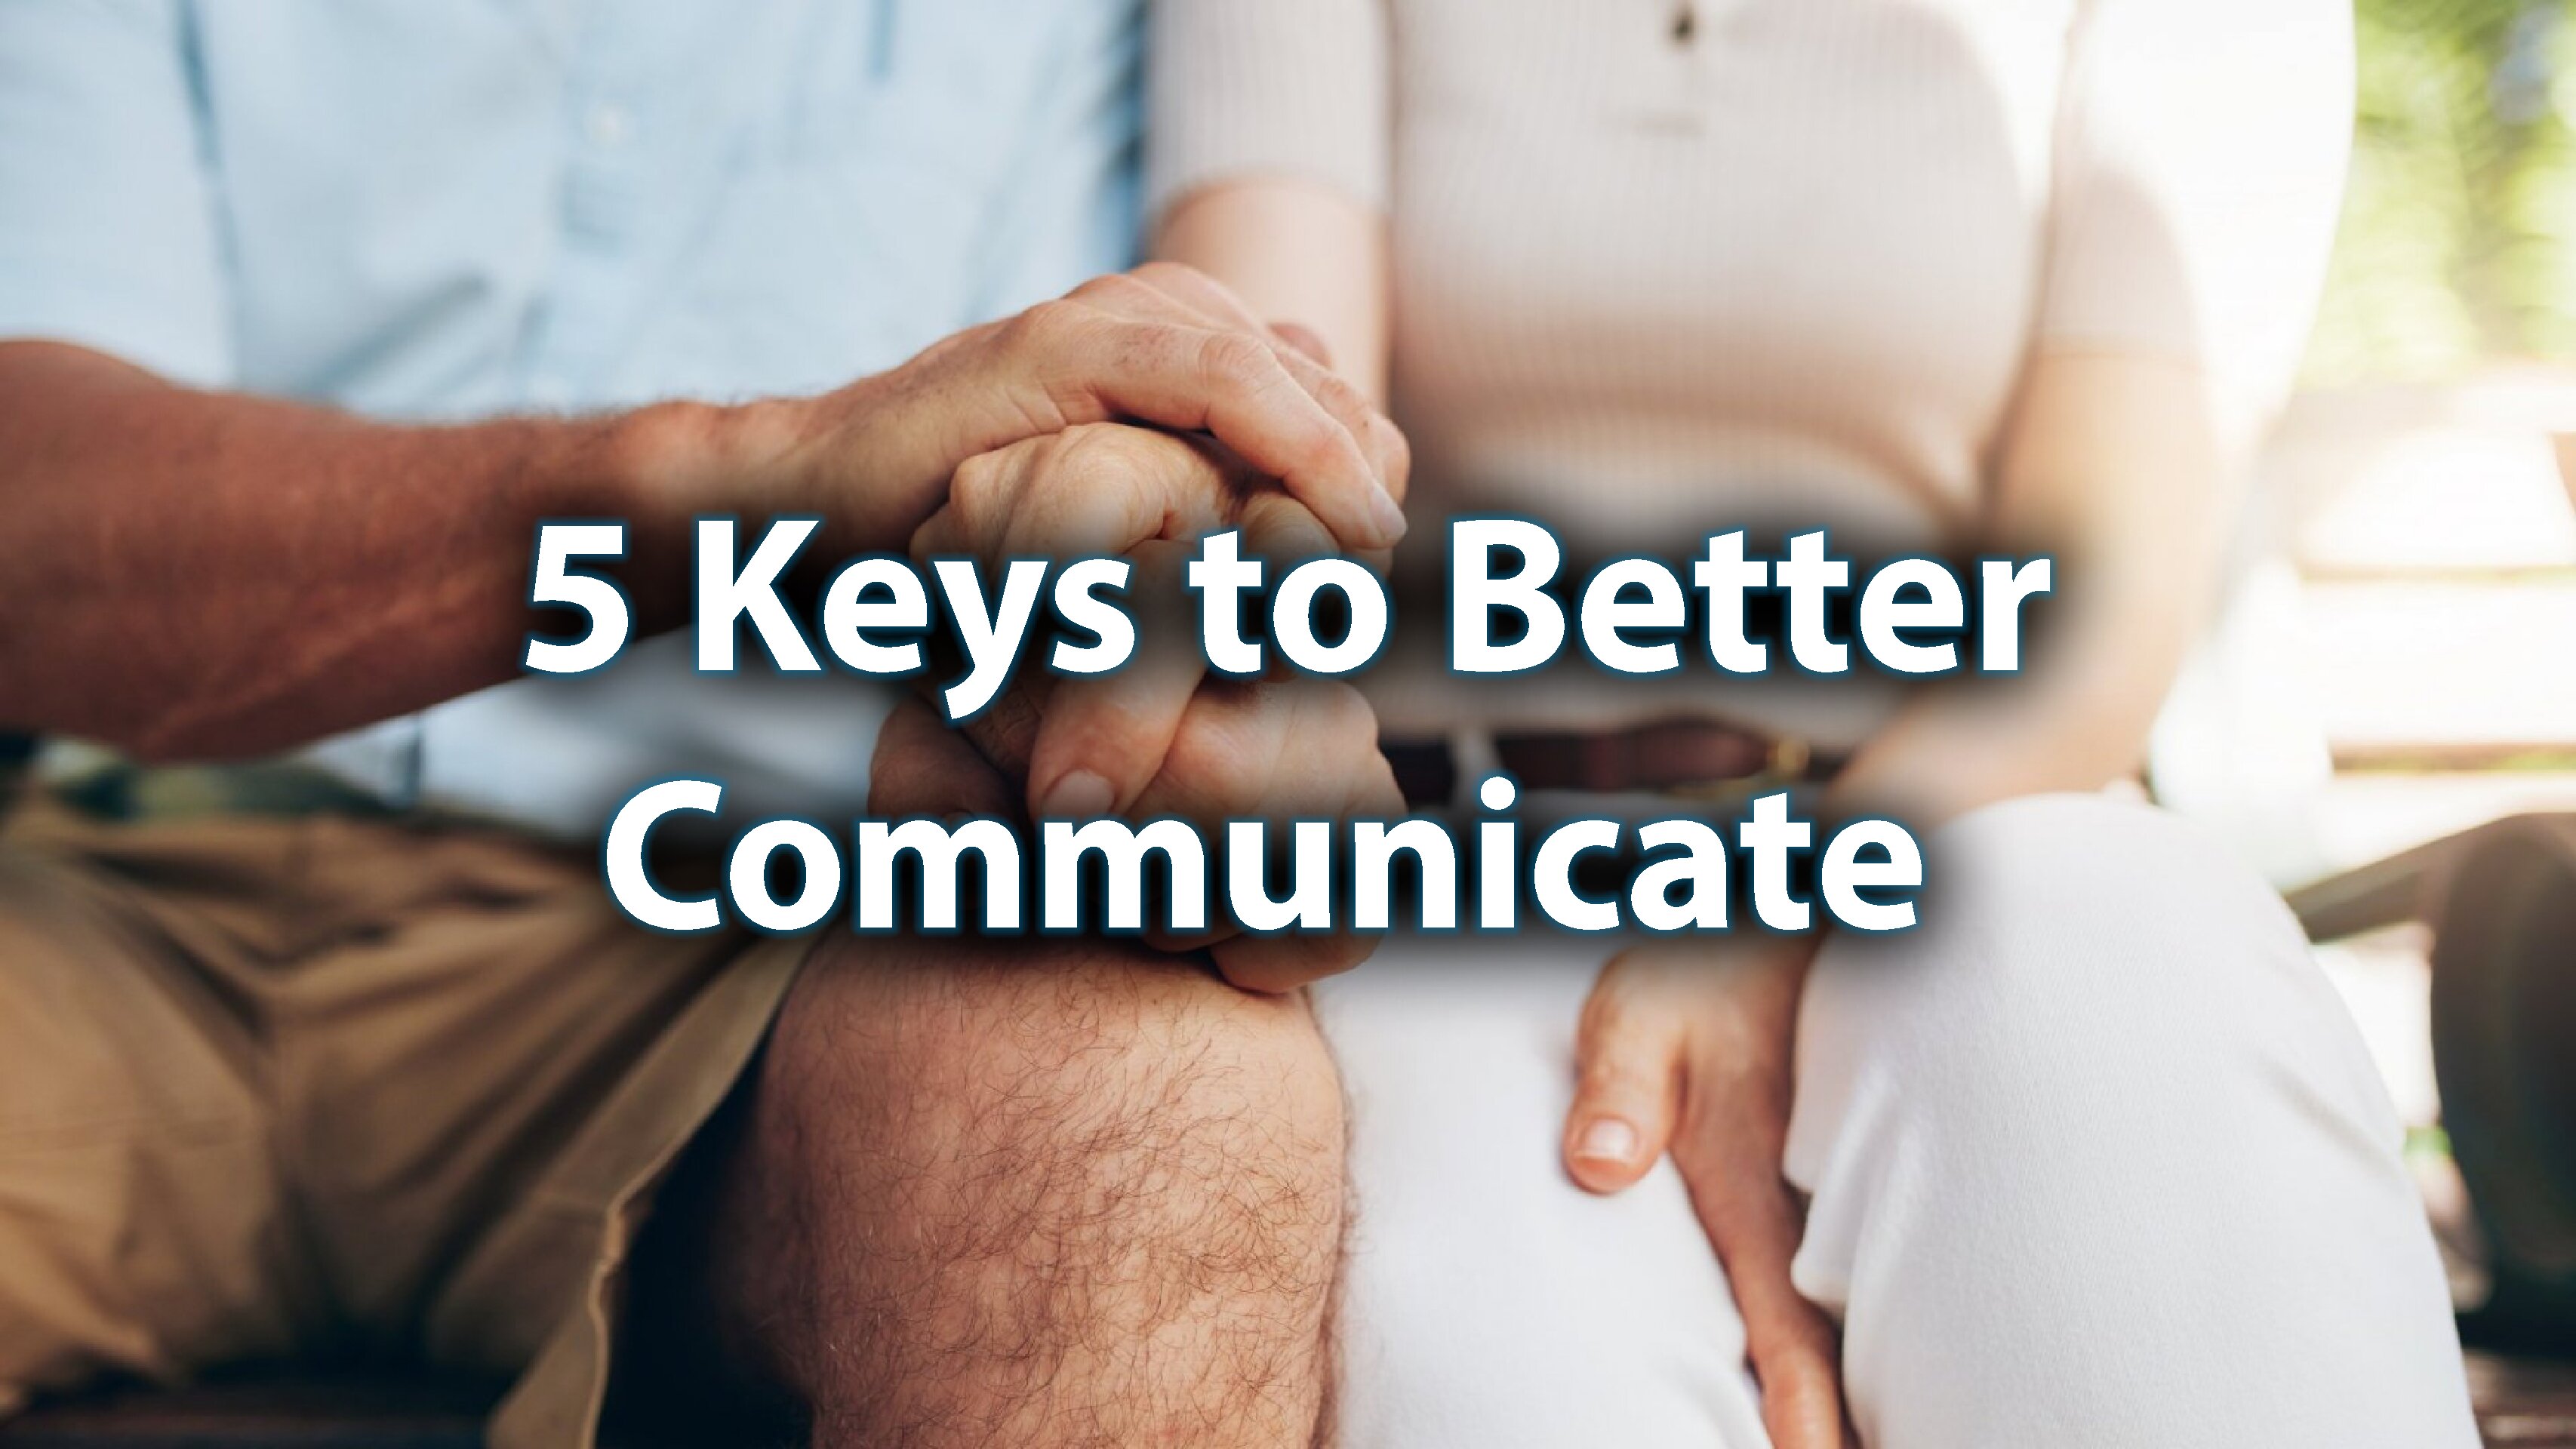 Day 10: 5 Keys to Better Communicate